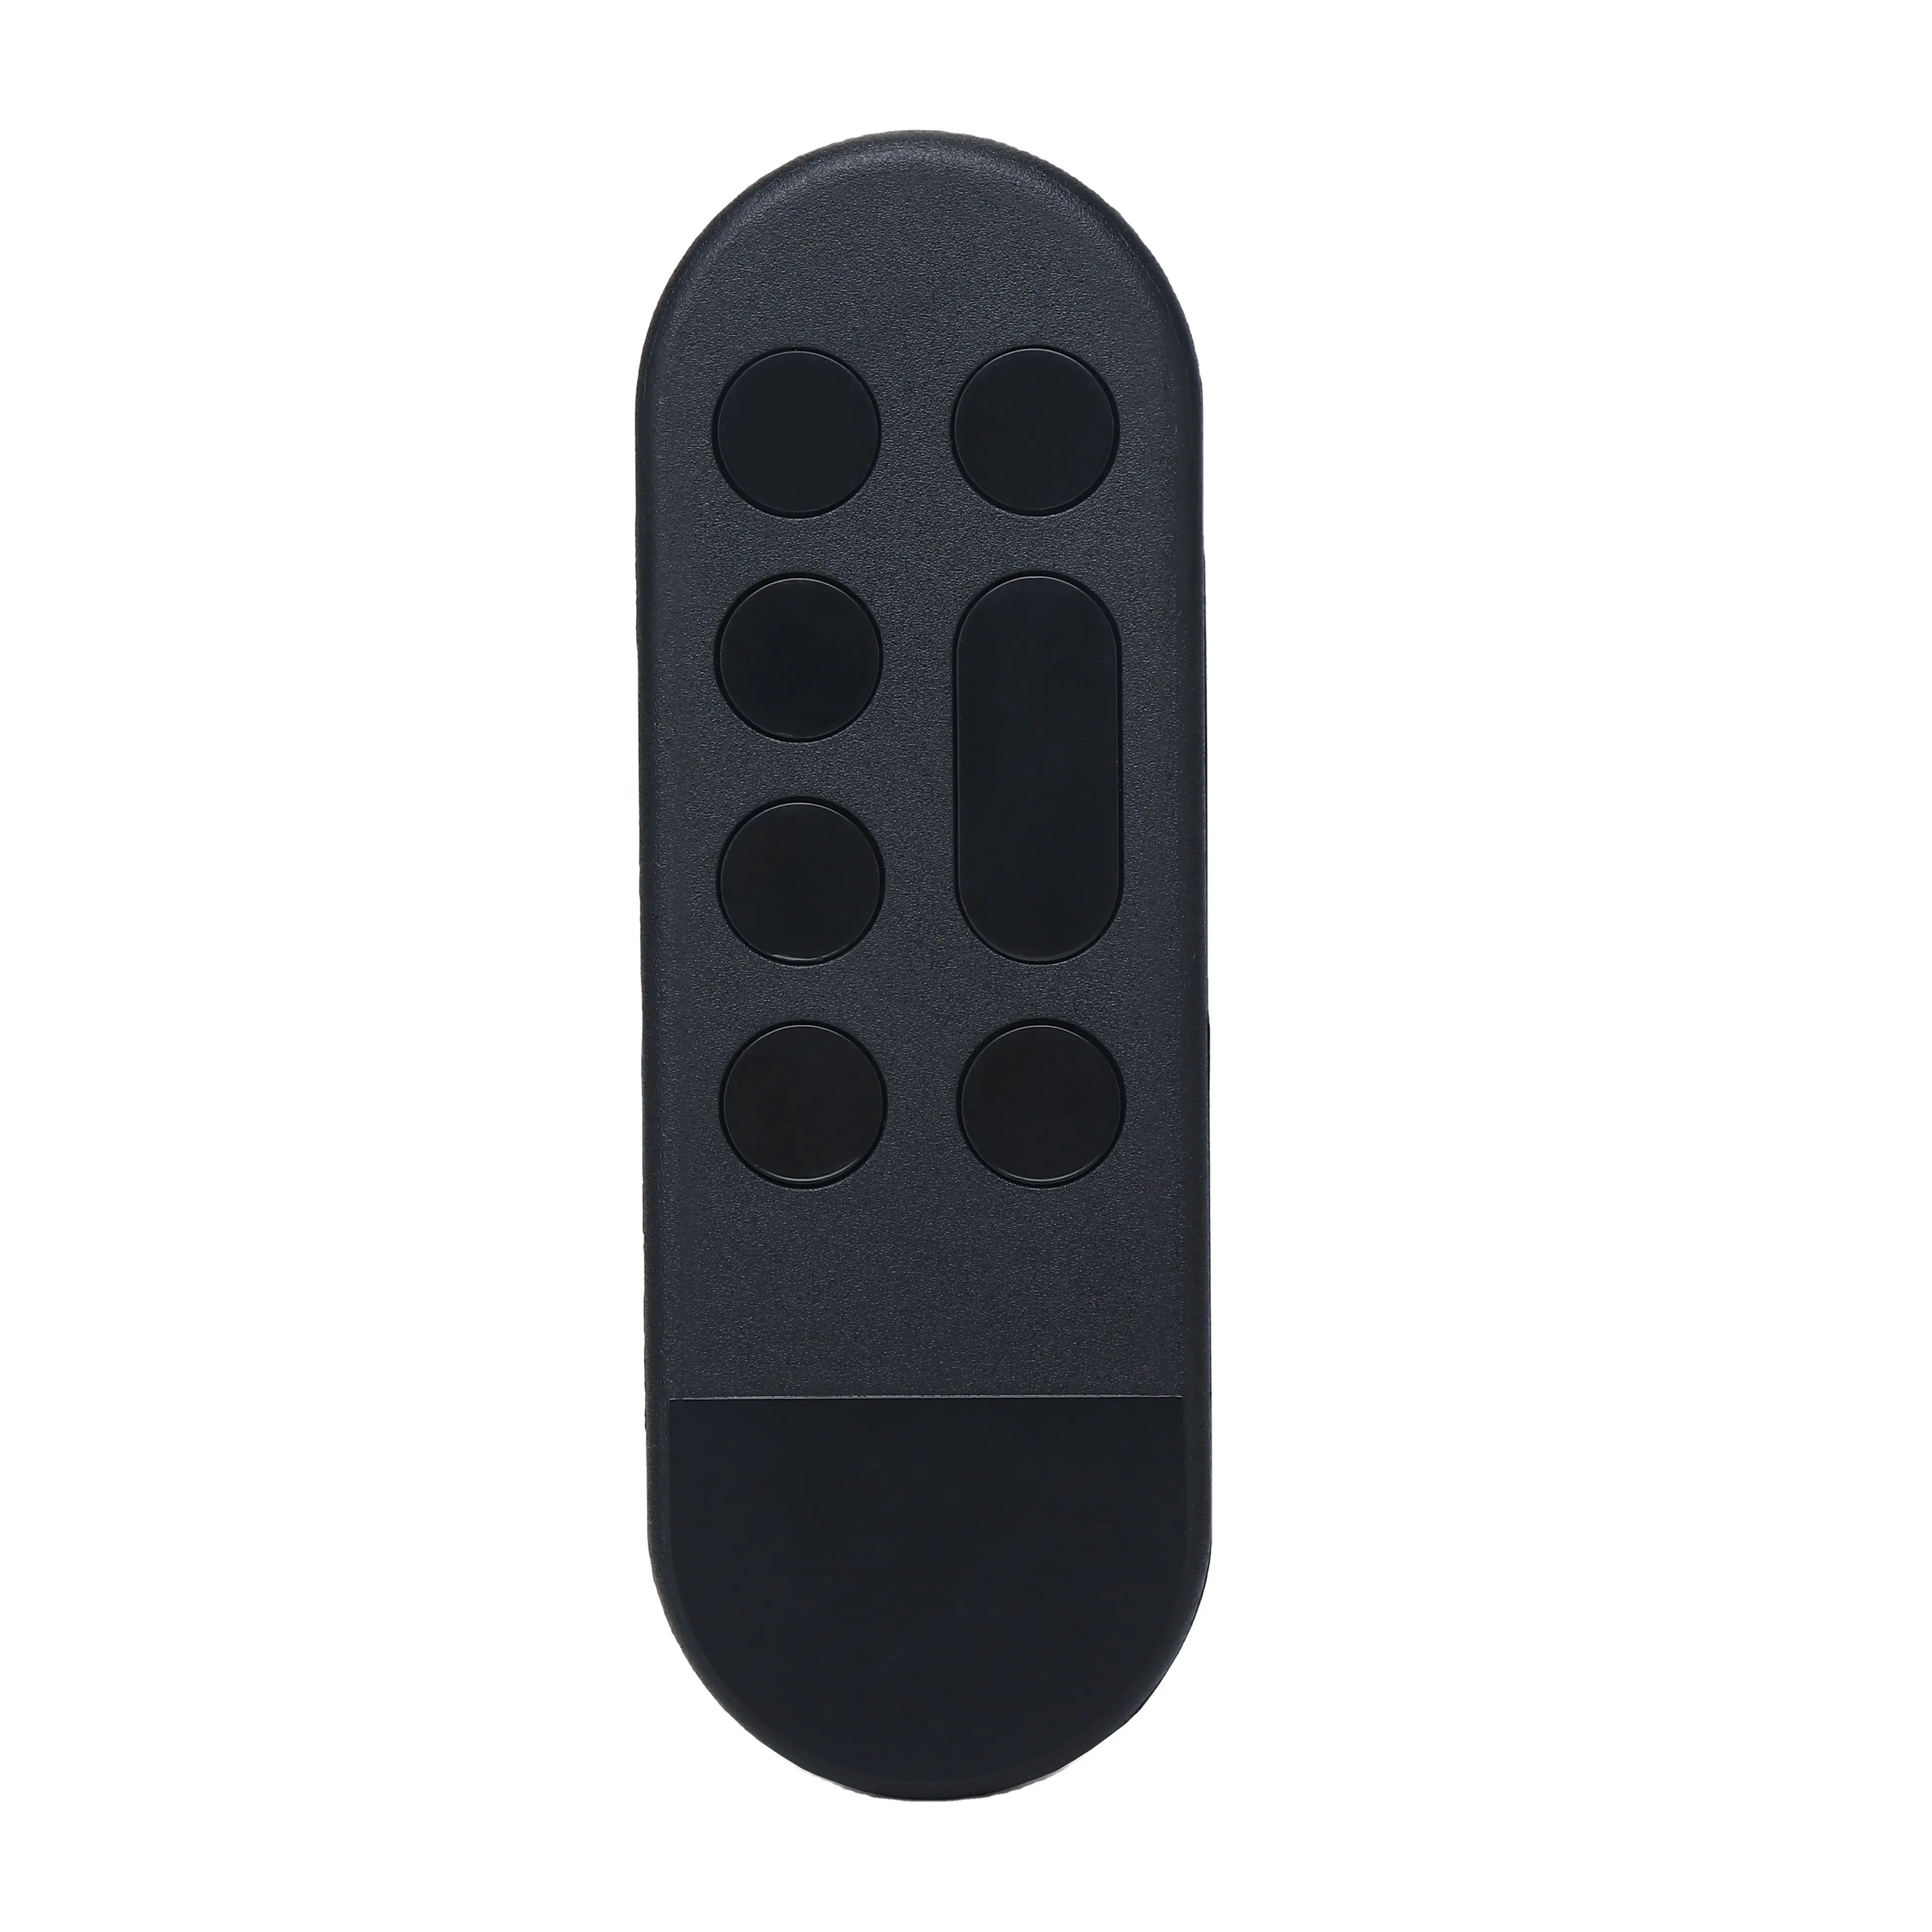 Newest 6 keys or 8 keys IR remote control for home appliances custom 433mhz remote control for fan